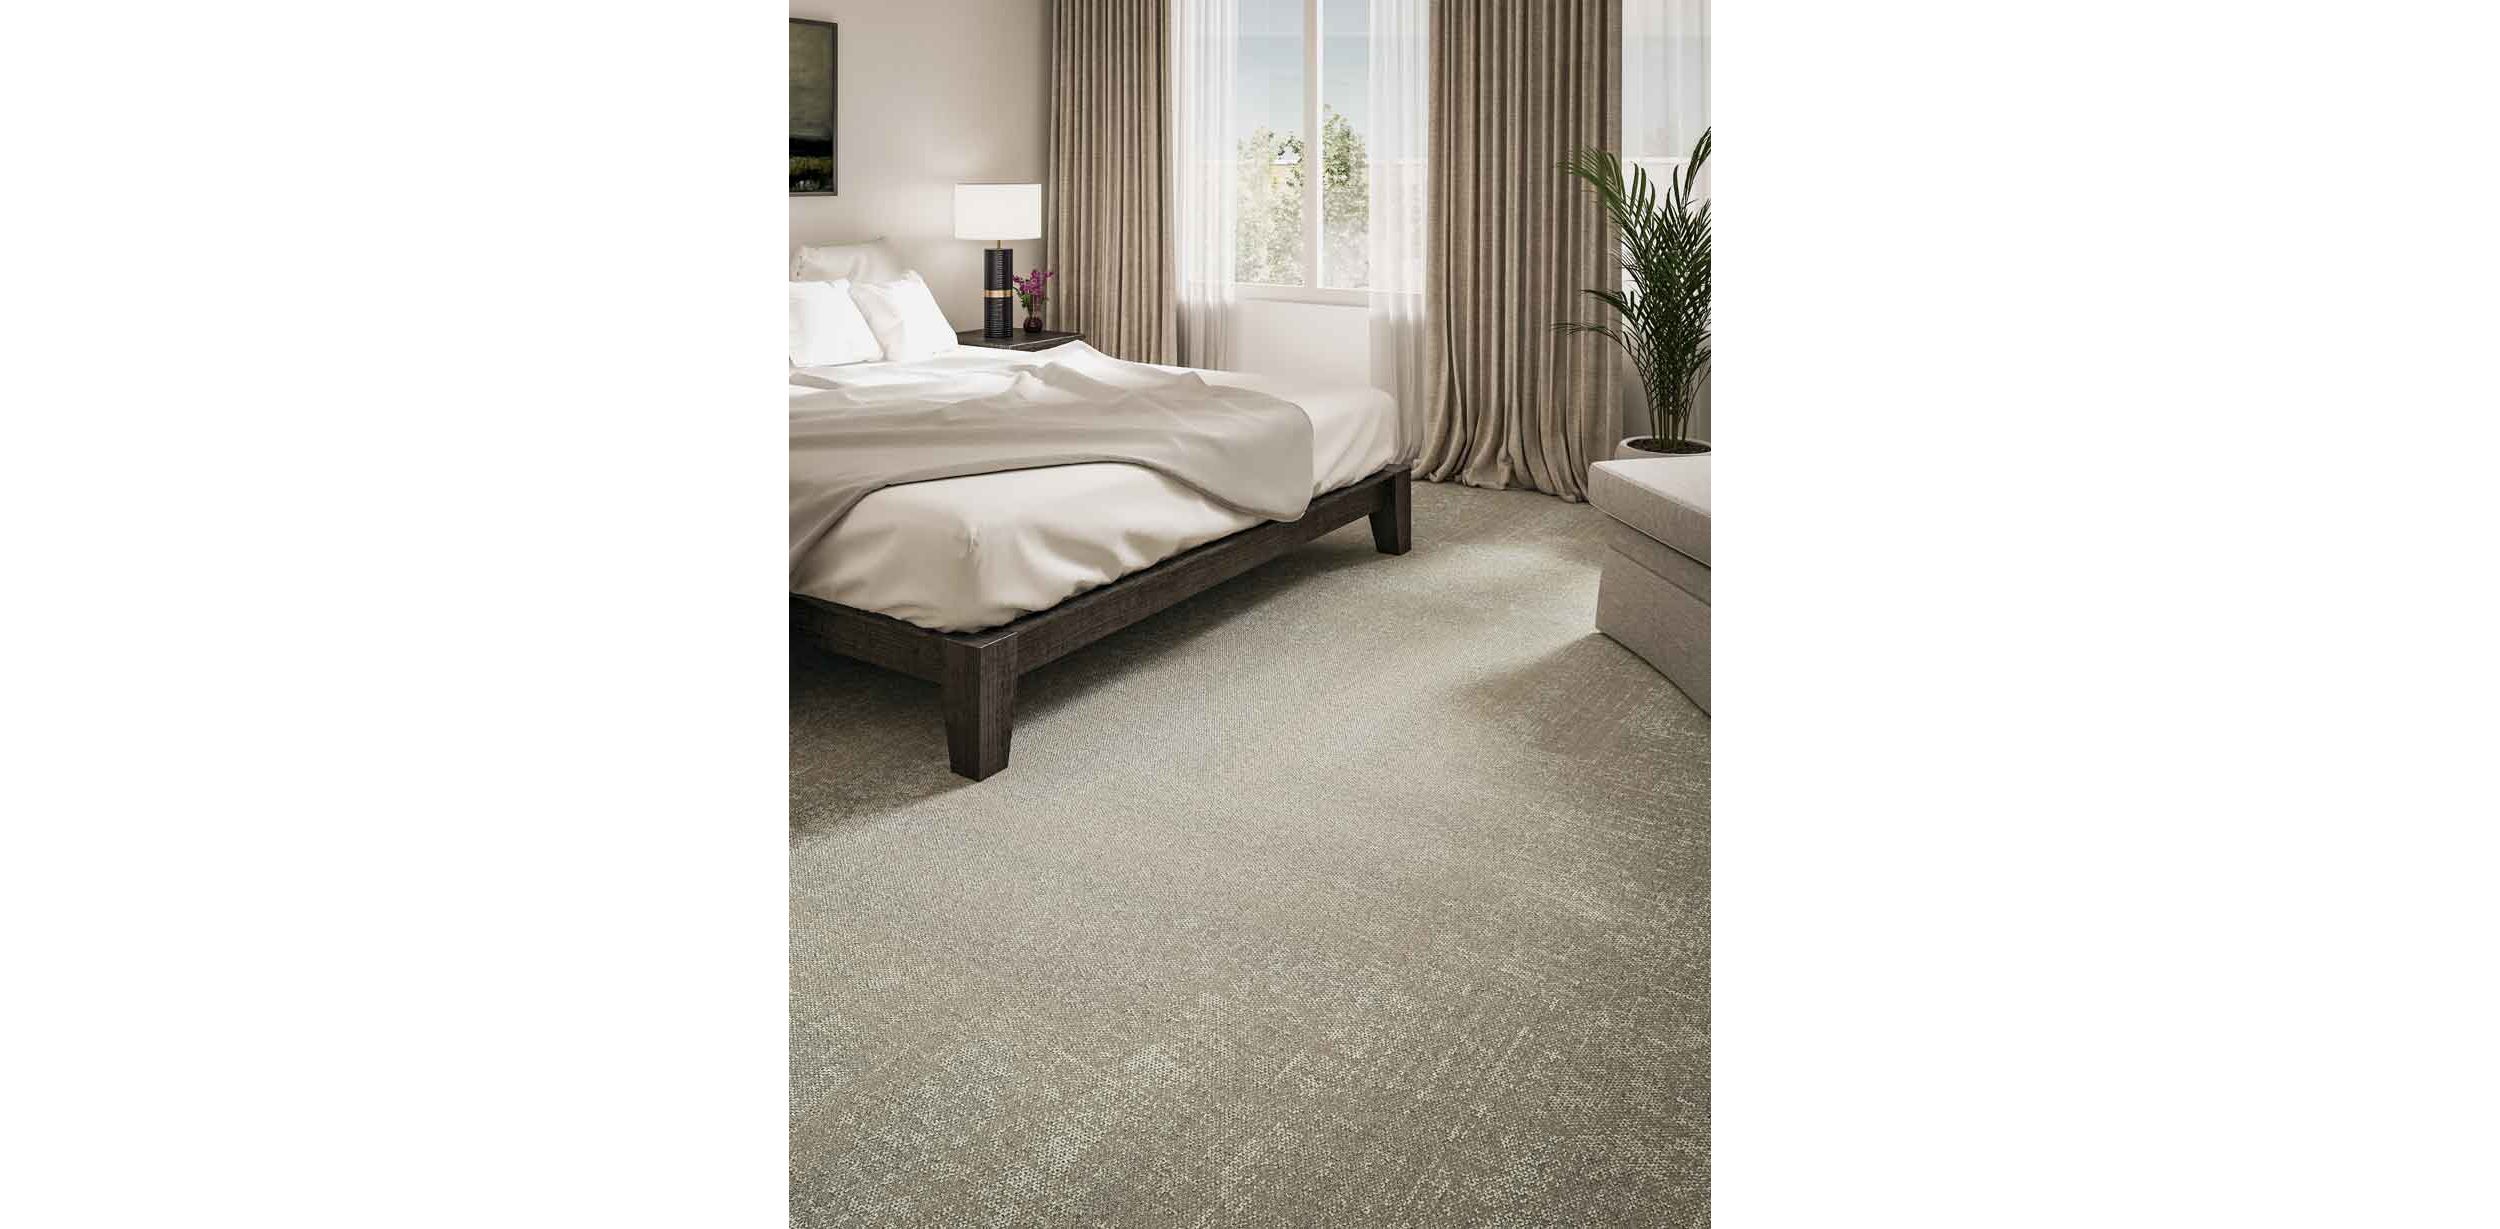 Interface Veiled Brushwork carpet tile in hotel suite imagen número 2